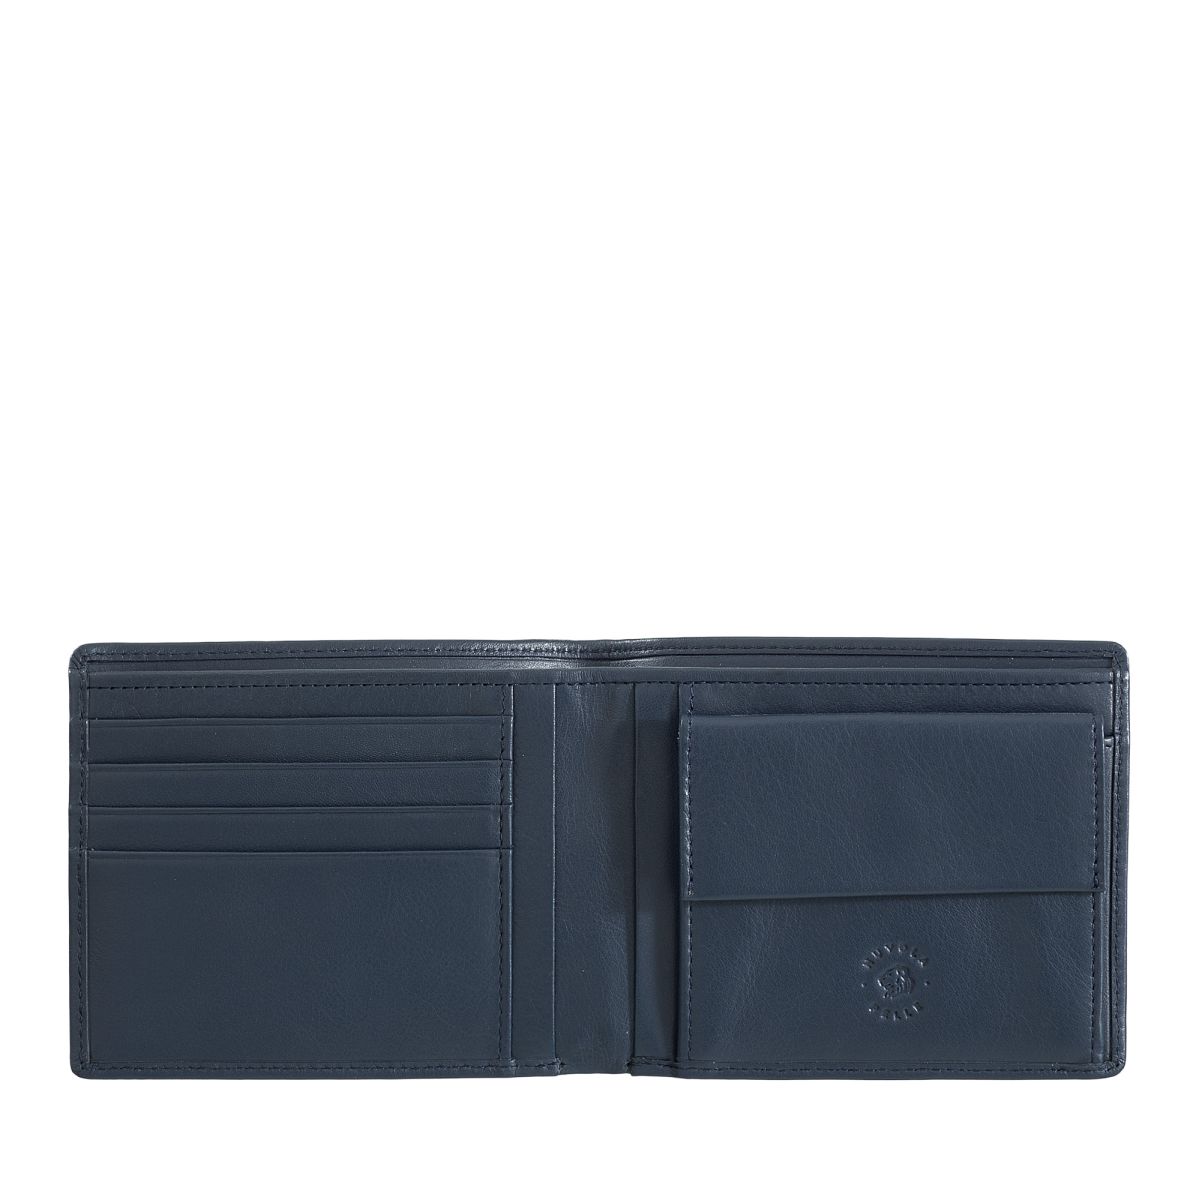 Pizhenbao Men's Brown Leather Wallet WL3